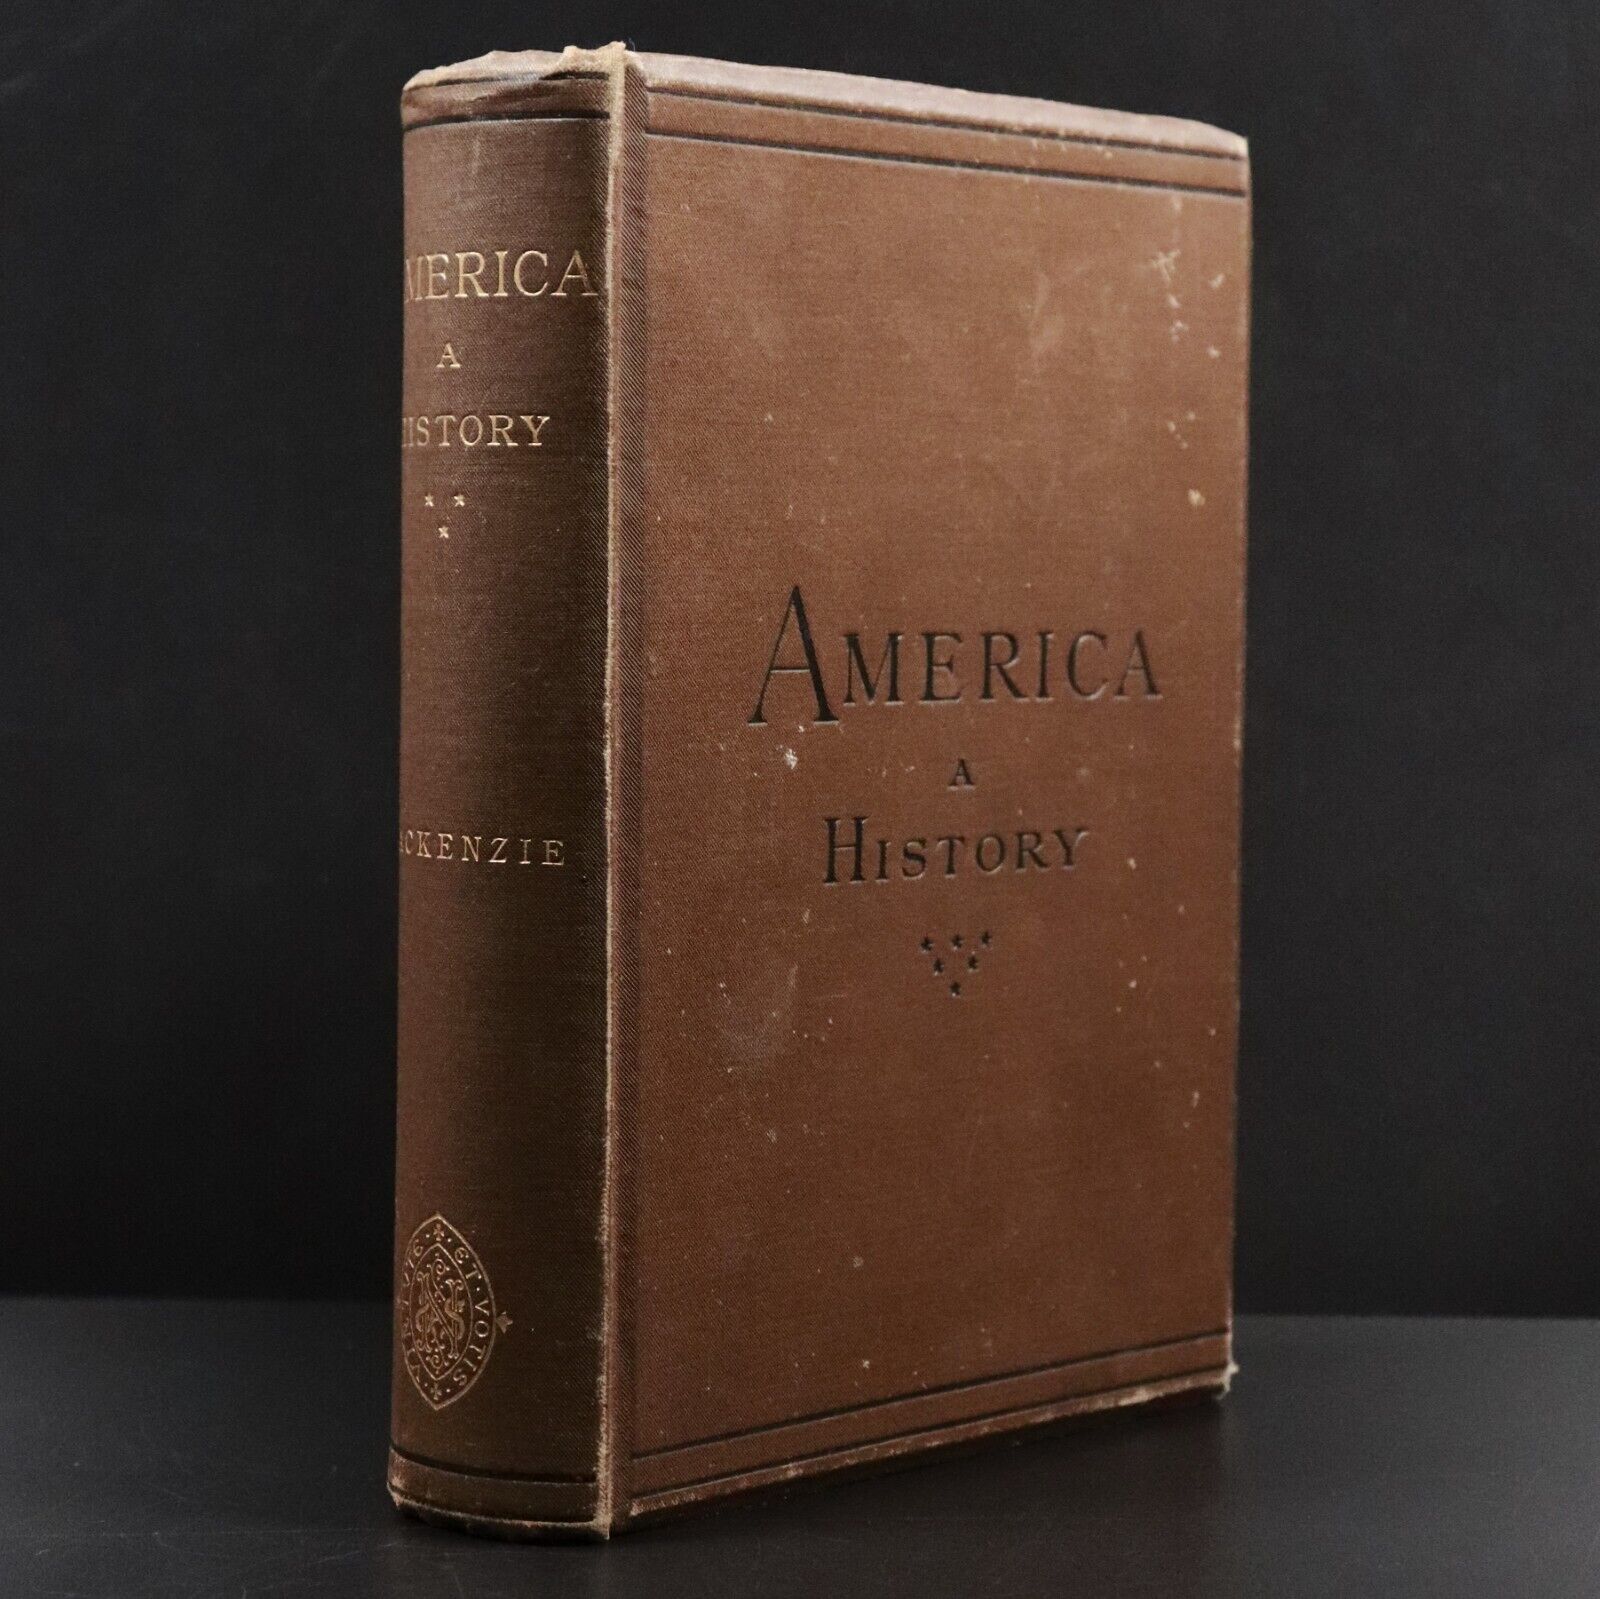 1887 America: A History by Robert MacKenzie Antiquarian American History Book